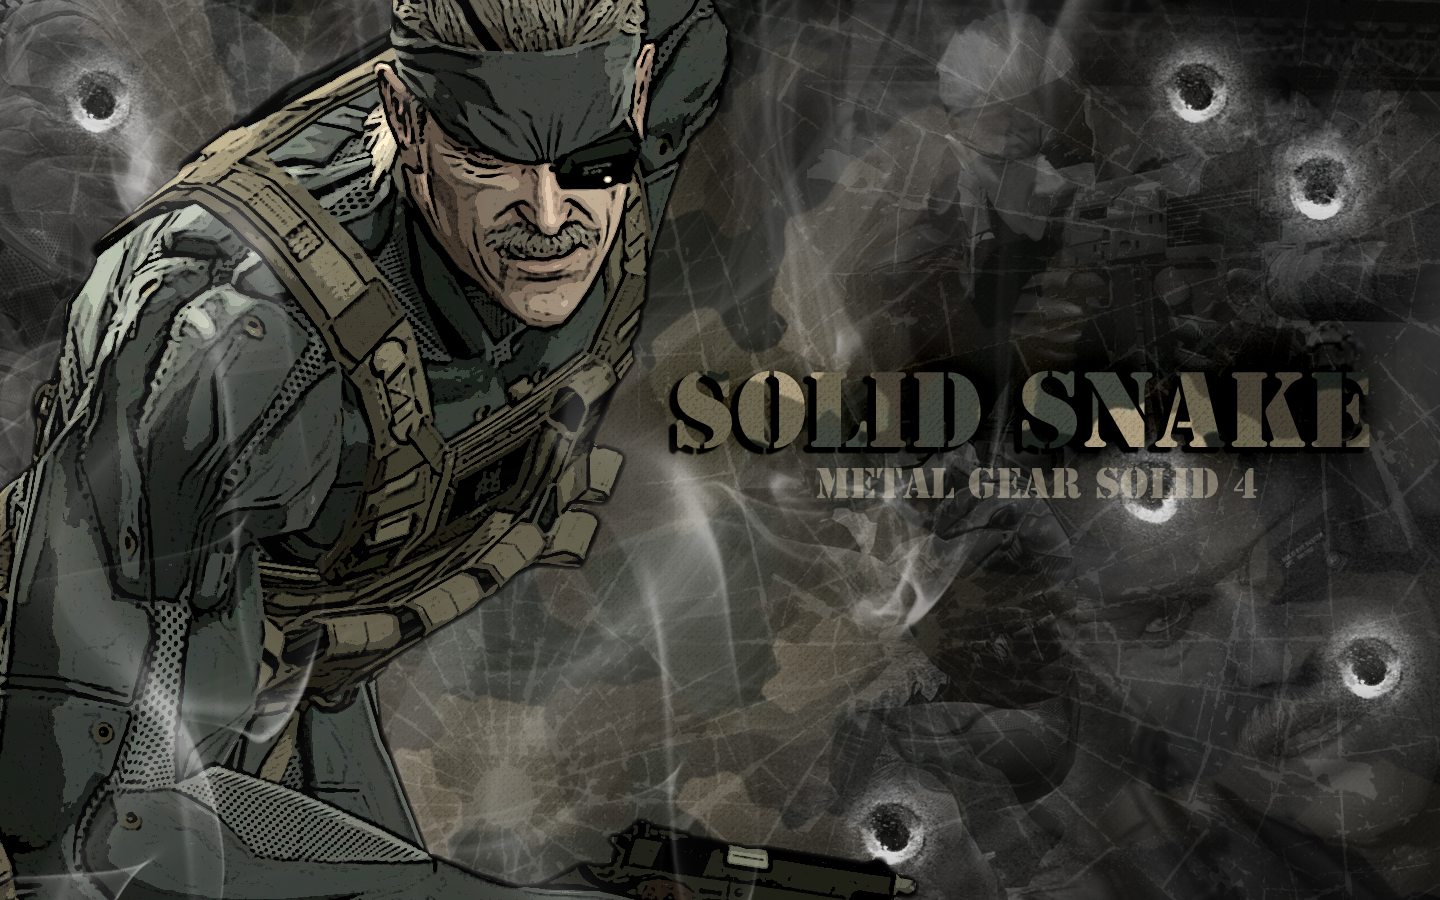 Solid Snake Mgs4 Wallpaper By Hallucination Walker On Deviantart